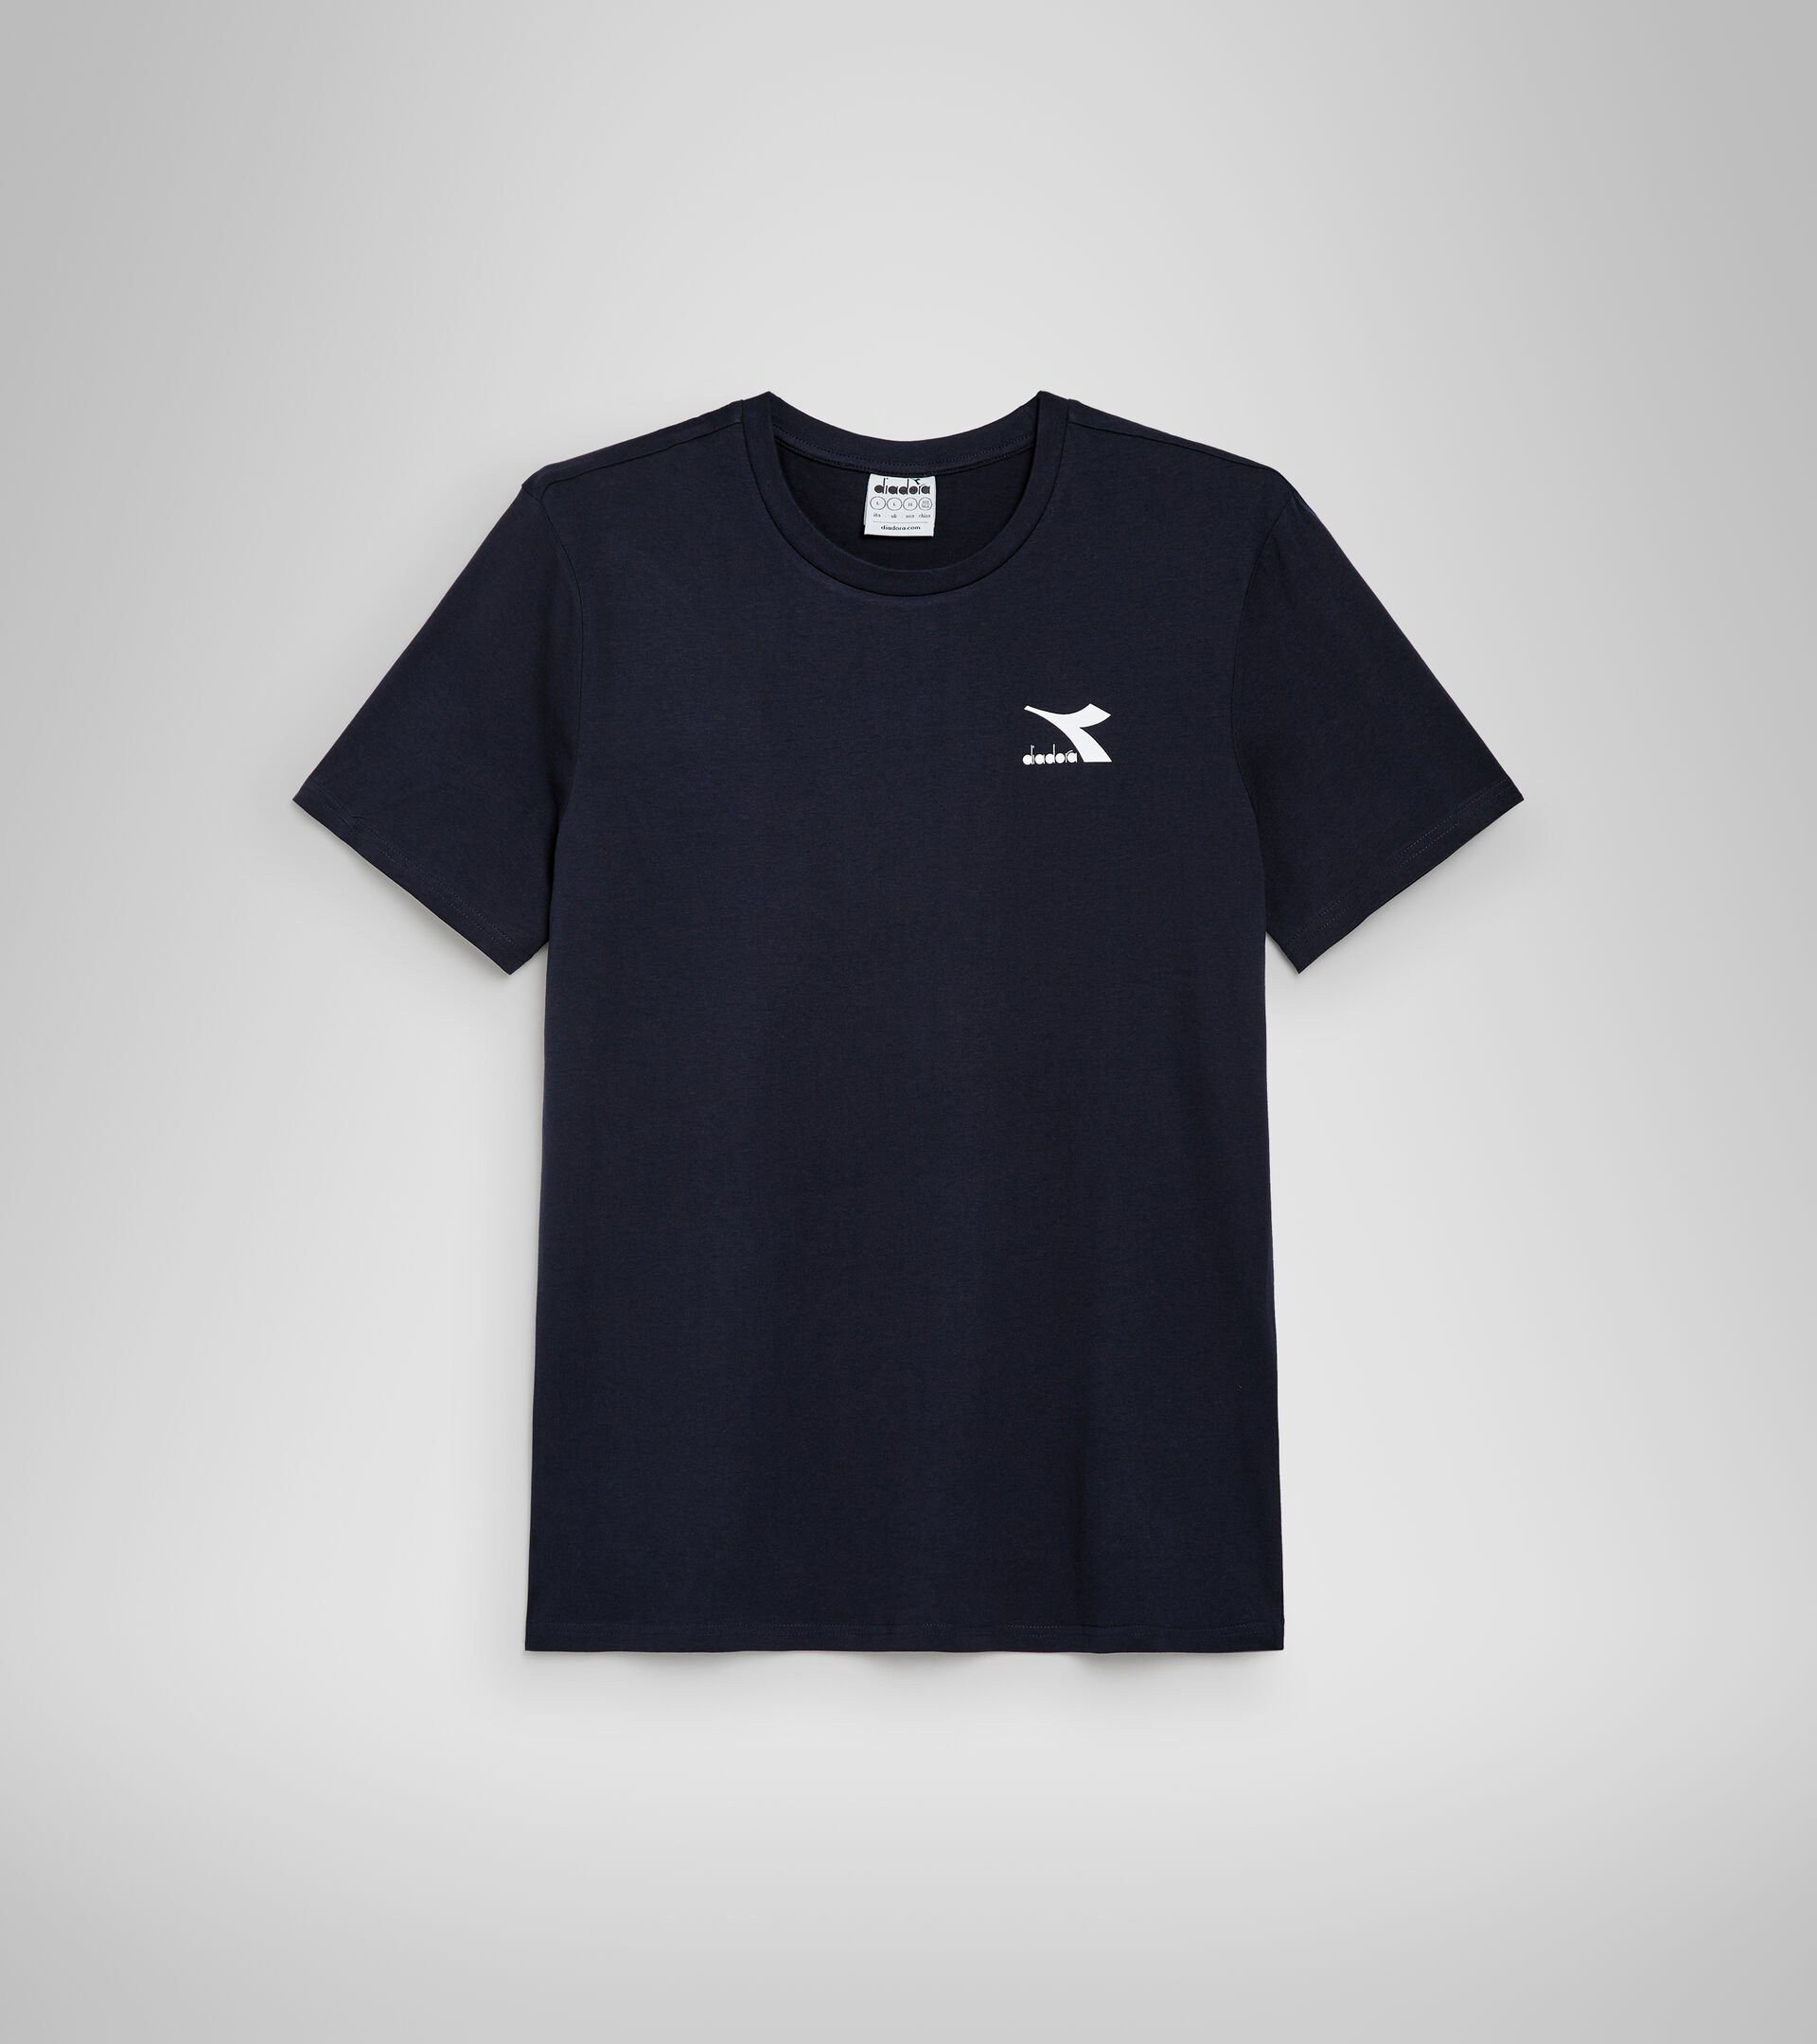 Camiseta deportiva - Hombre T-SHIRT SS CORE AZUL CHAQUETON - Diadora